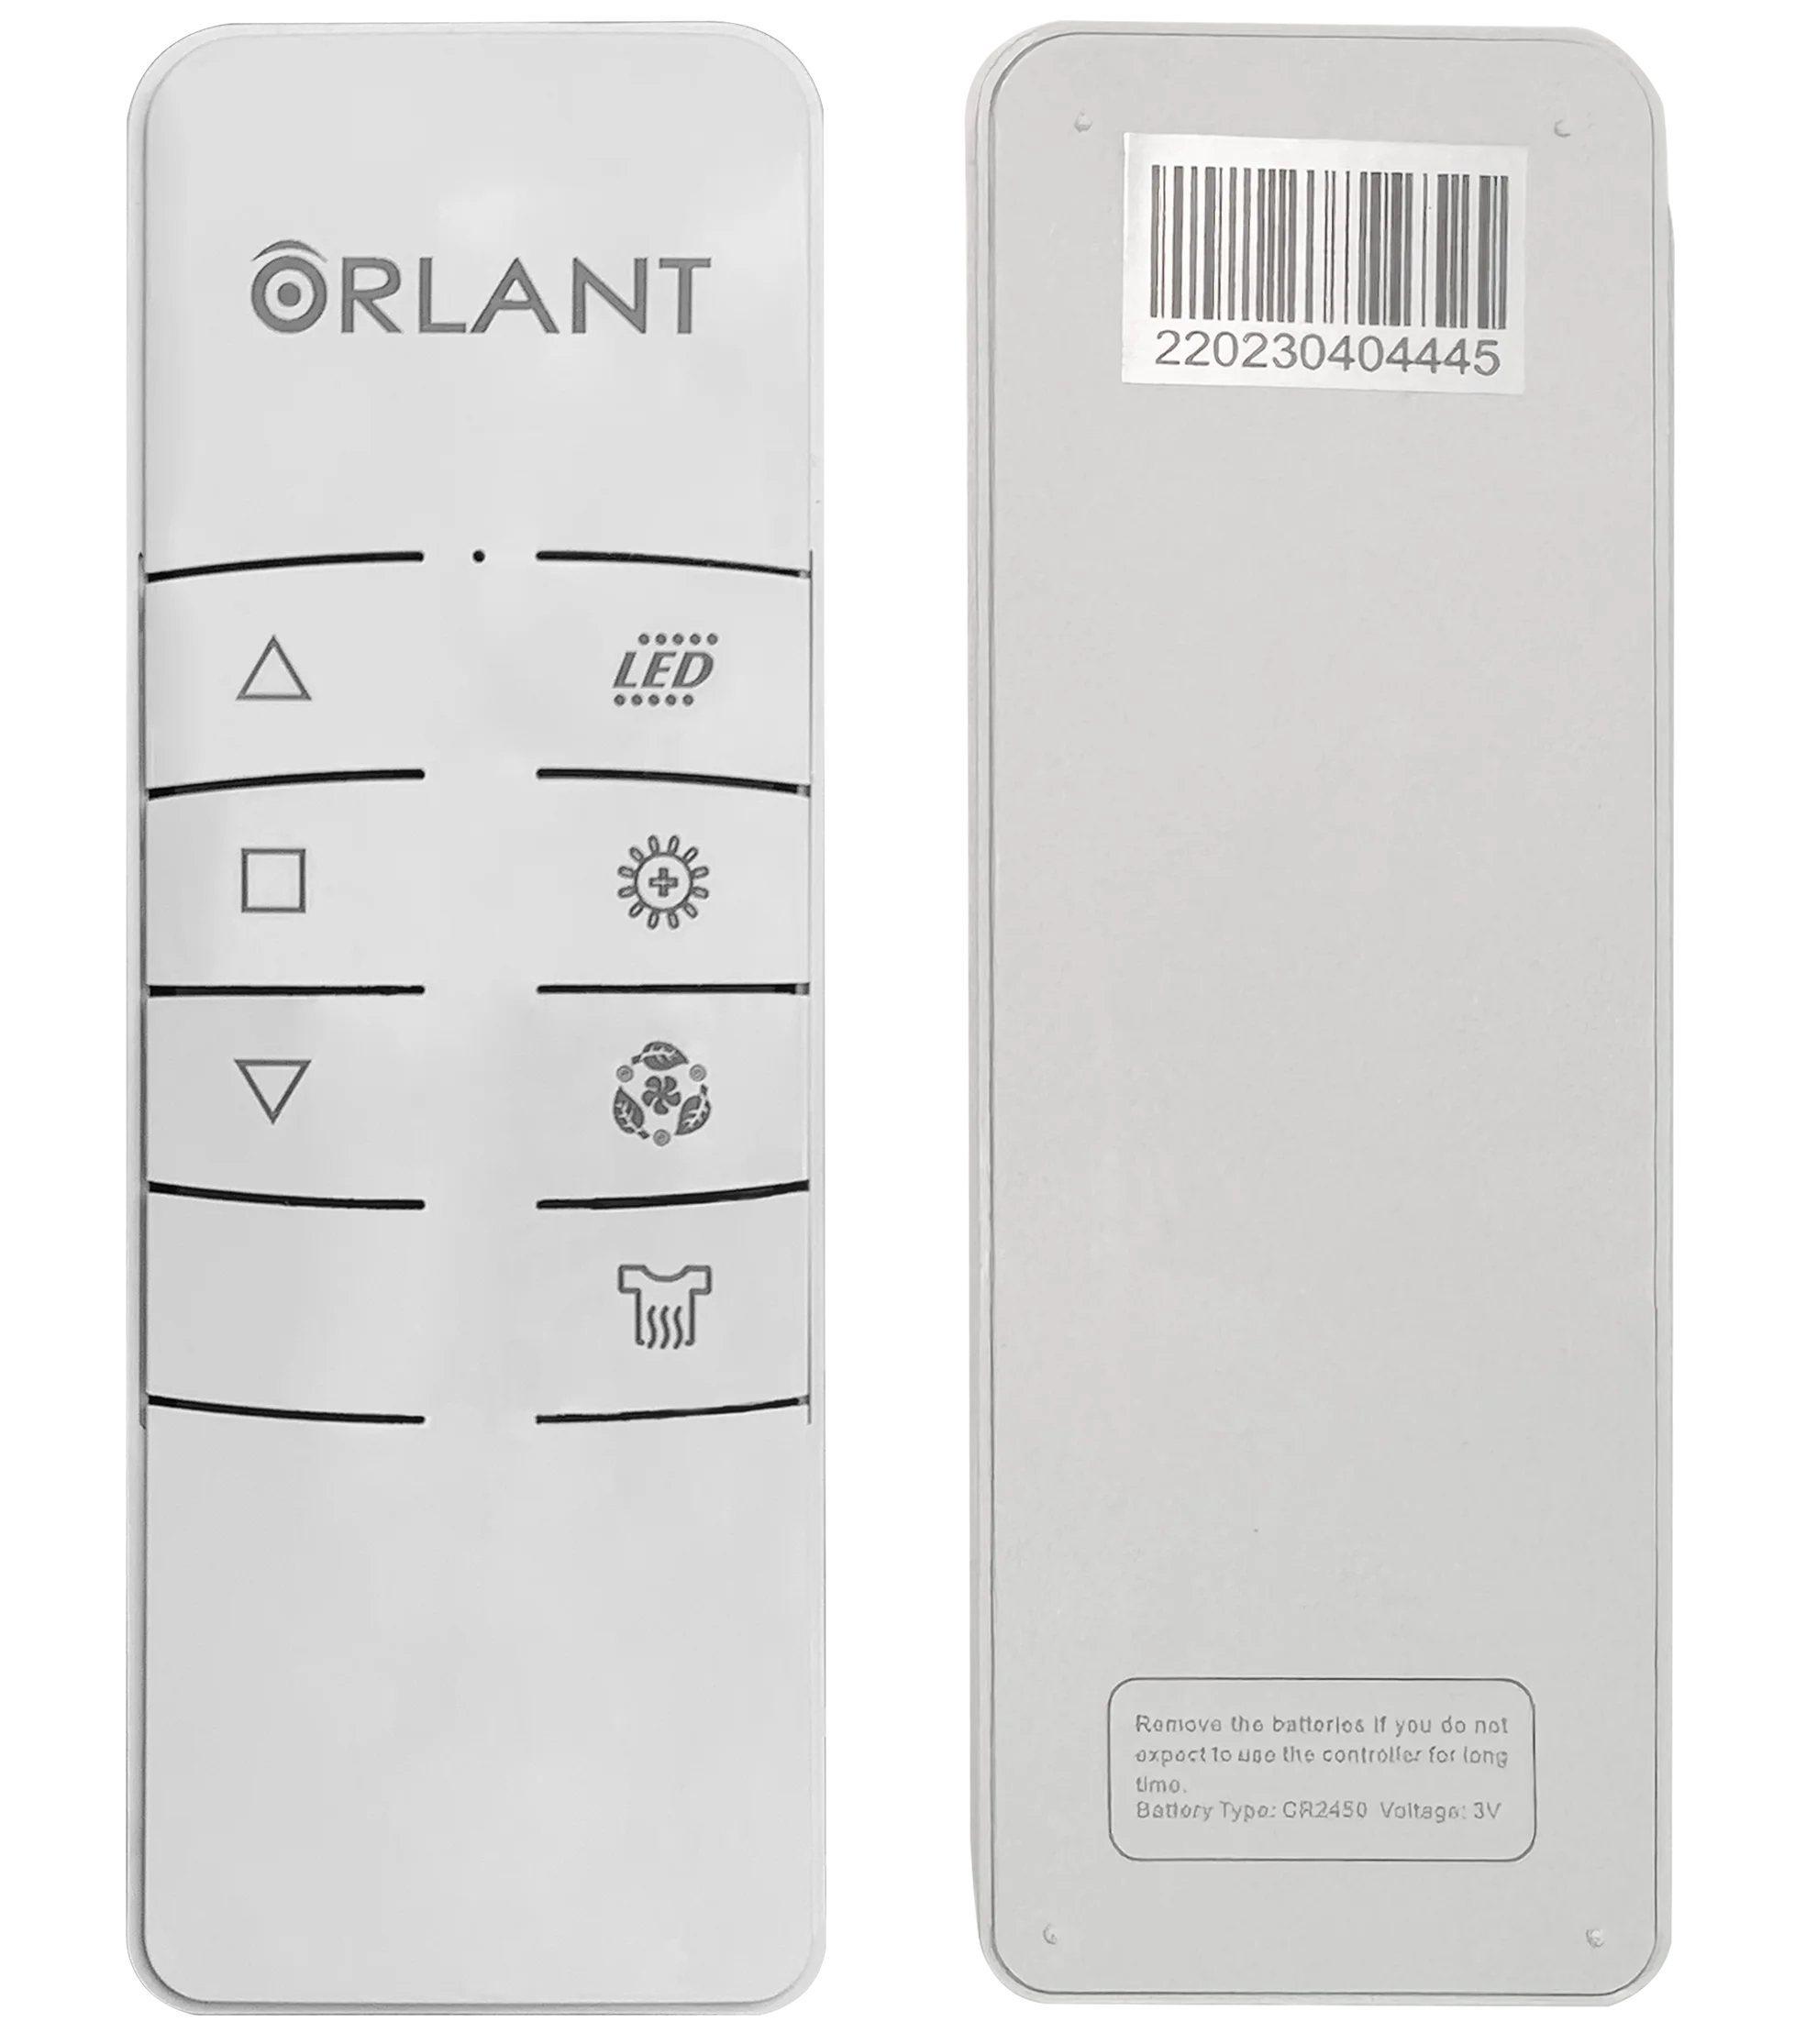 Orlant International Pte Ltd